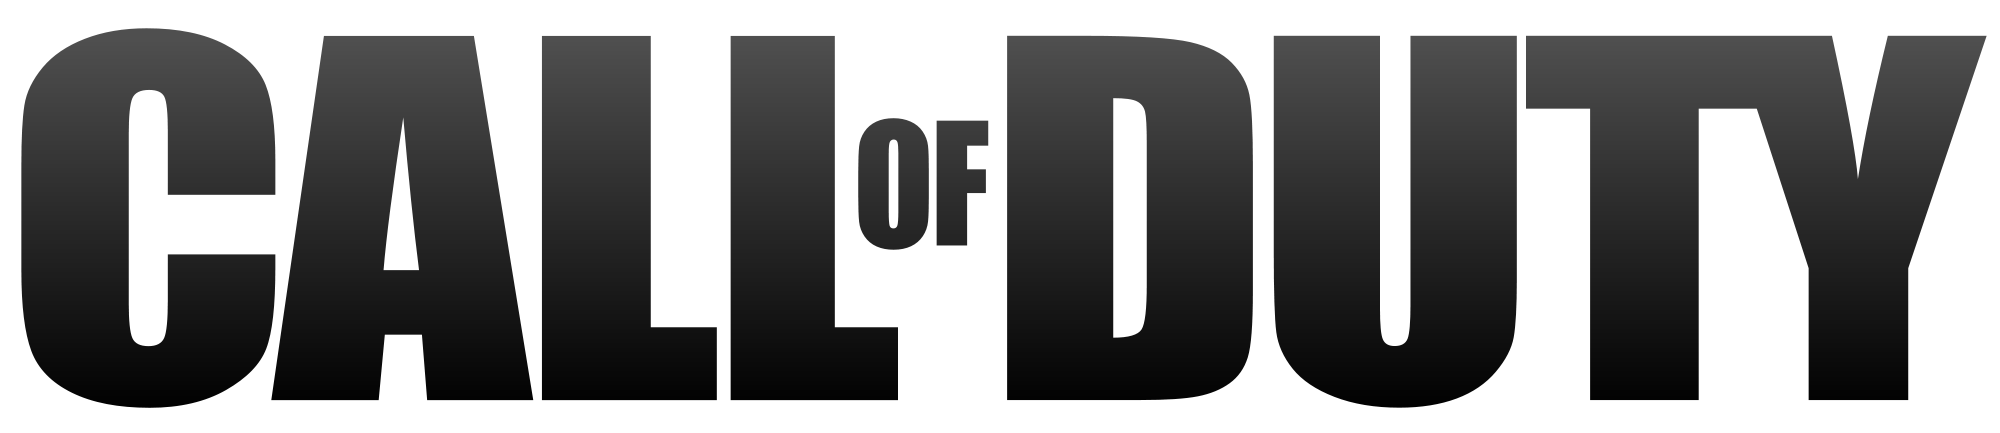 Call Of Duty Logo Png - Black